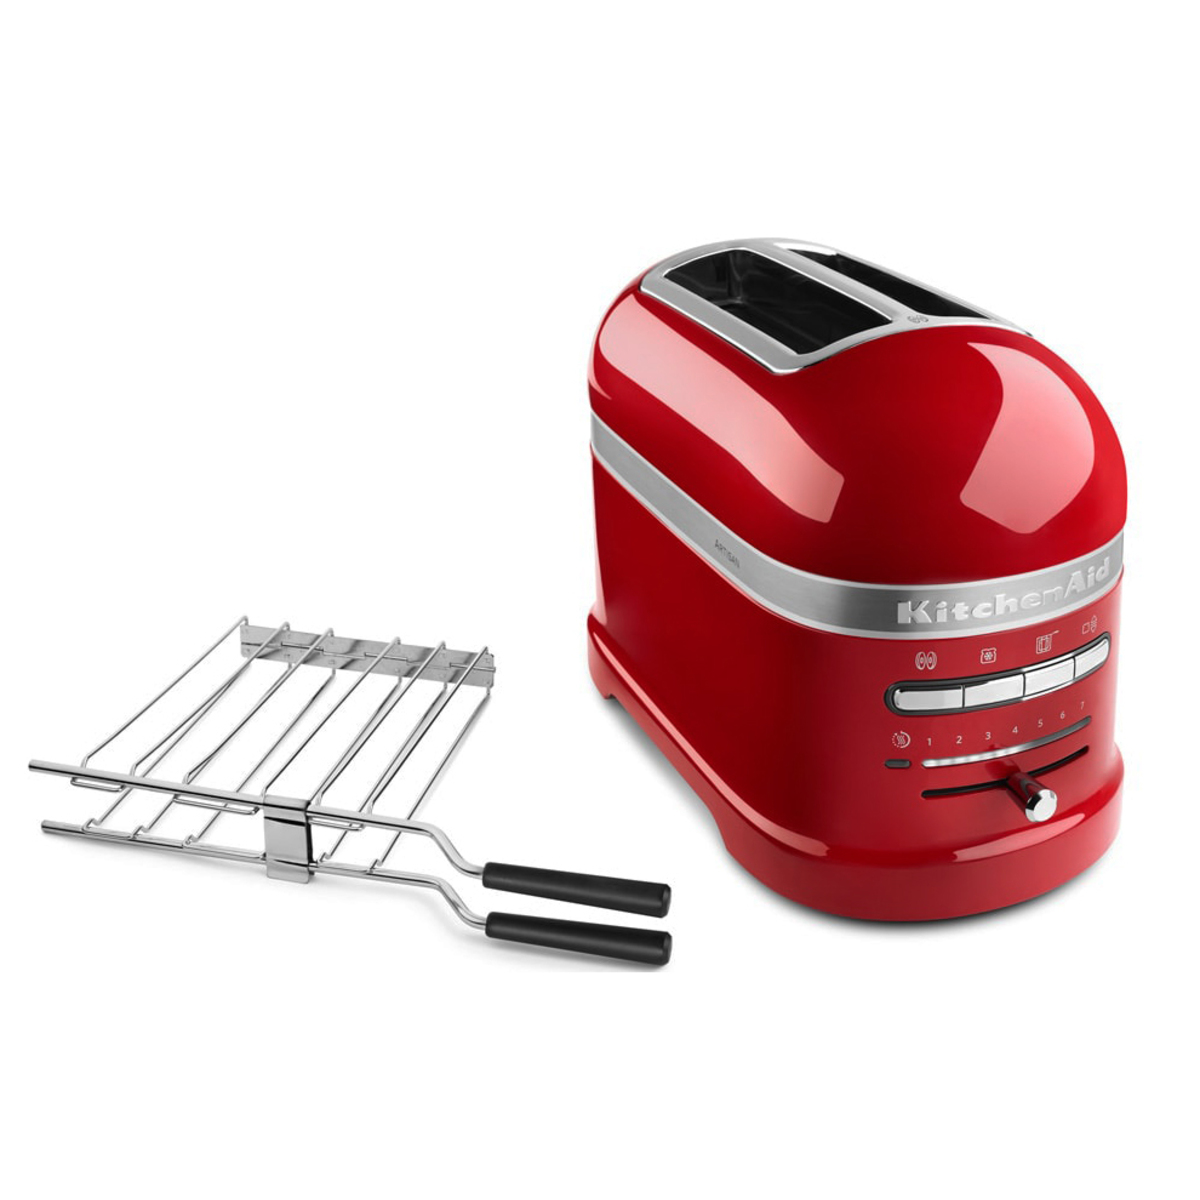 KitchenAid 5KMT2204BCA ARTISAN 2-Slot Toaster, Candy Apple